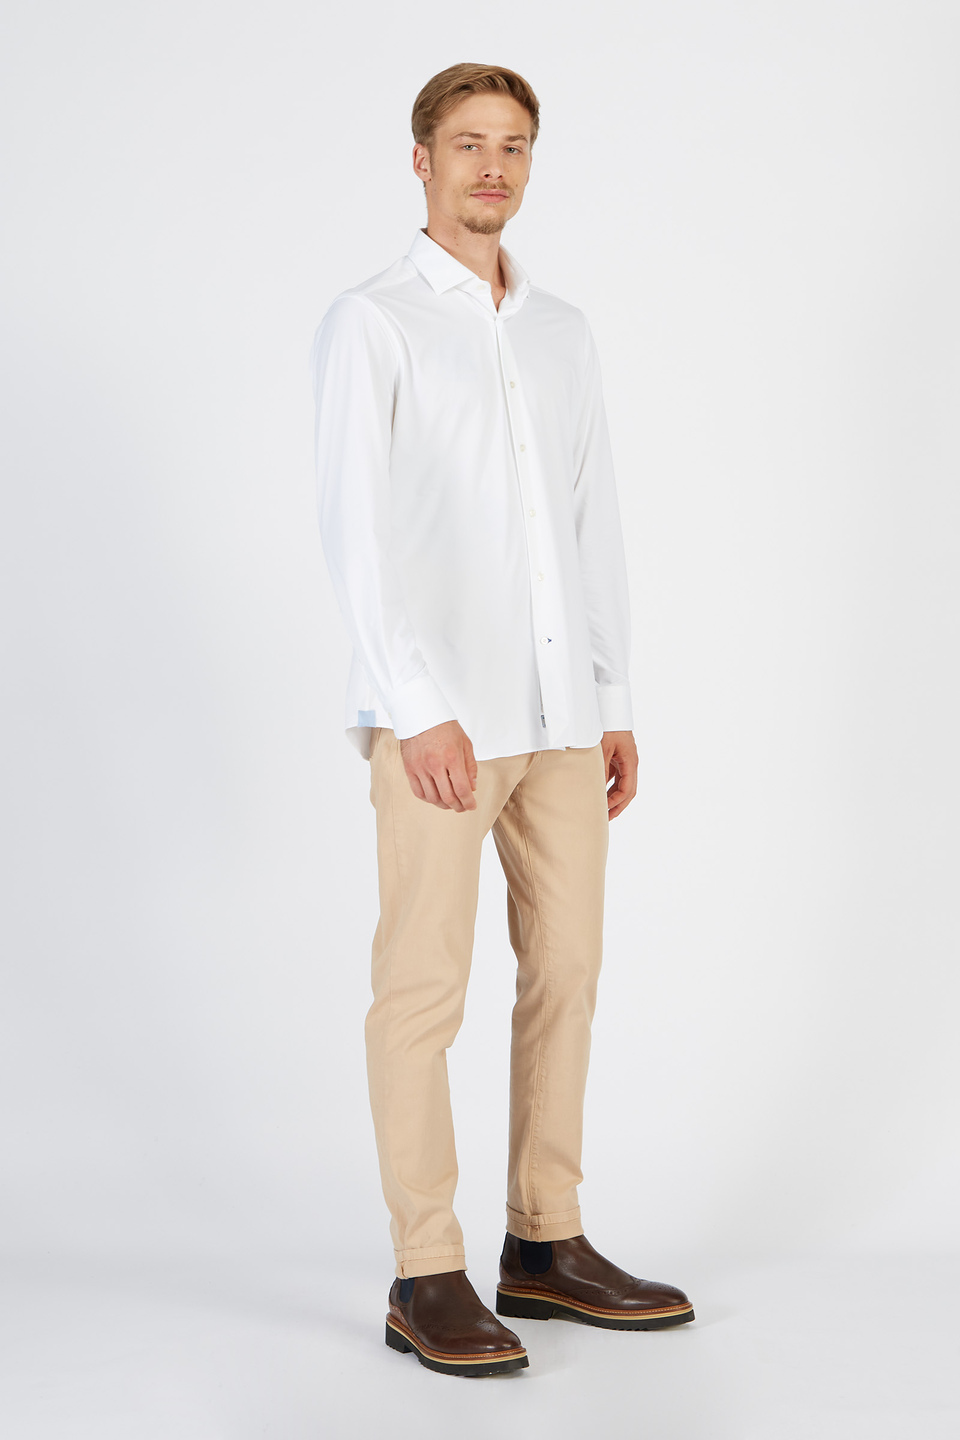 Camicia uomo Blue Ribbon in cotone jersey maniche lunghe regular fit - La Martina - Official Online Shop